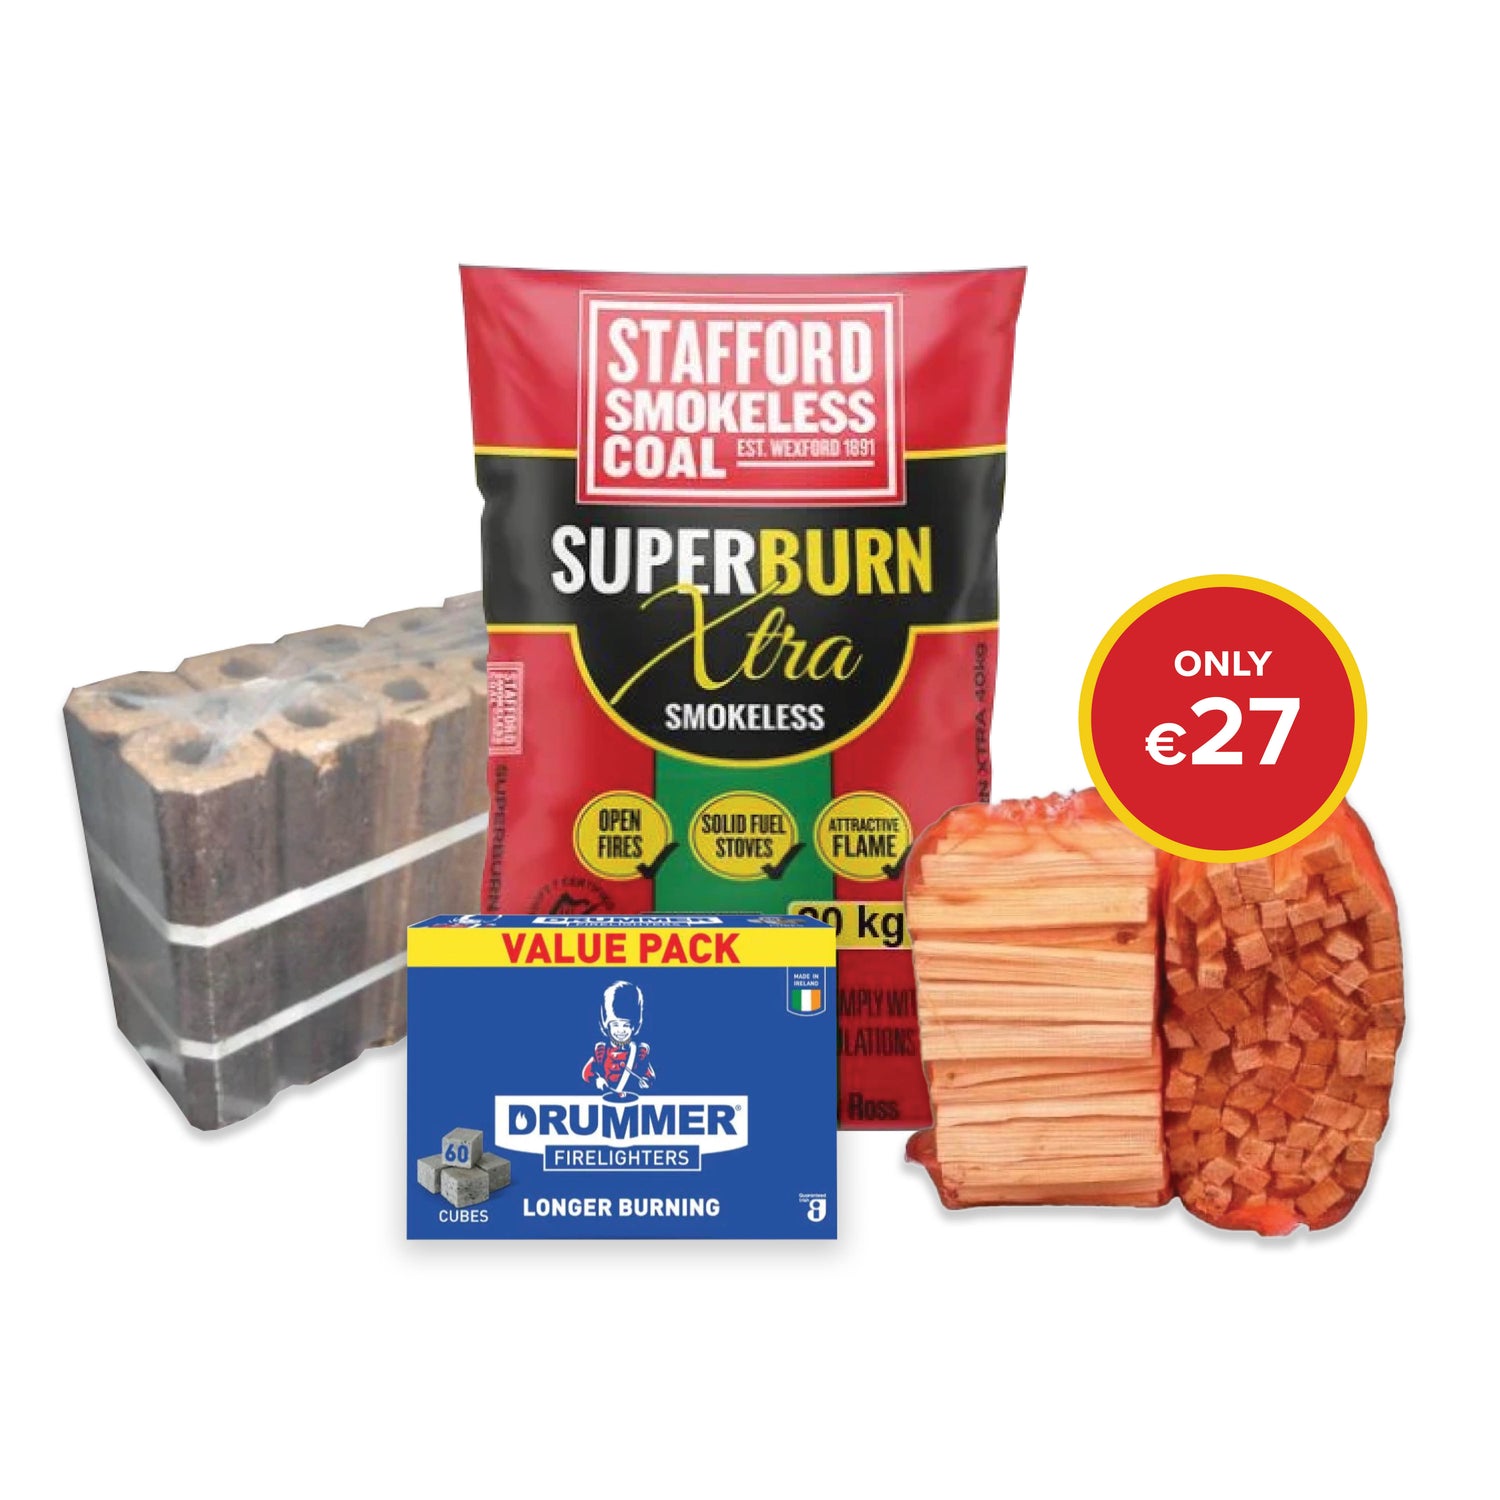 Buy 1 bag Superburn Xtra 20kg, 1 box of Drummer Firelighters, 1 bags of Kindling and 1 pack of Hardwood Briquettes for €27